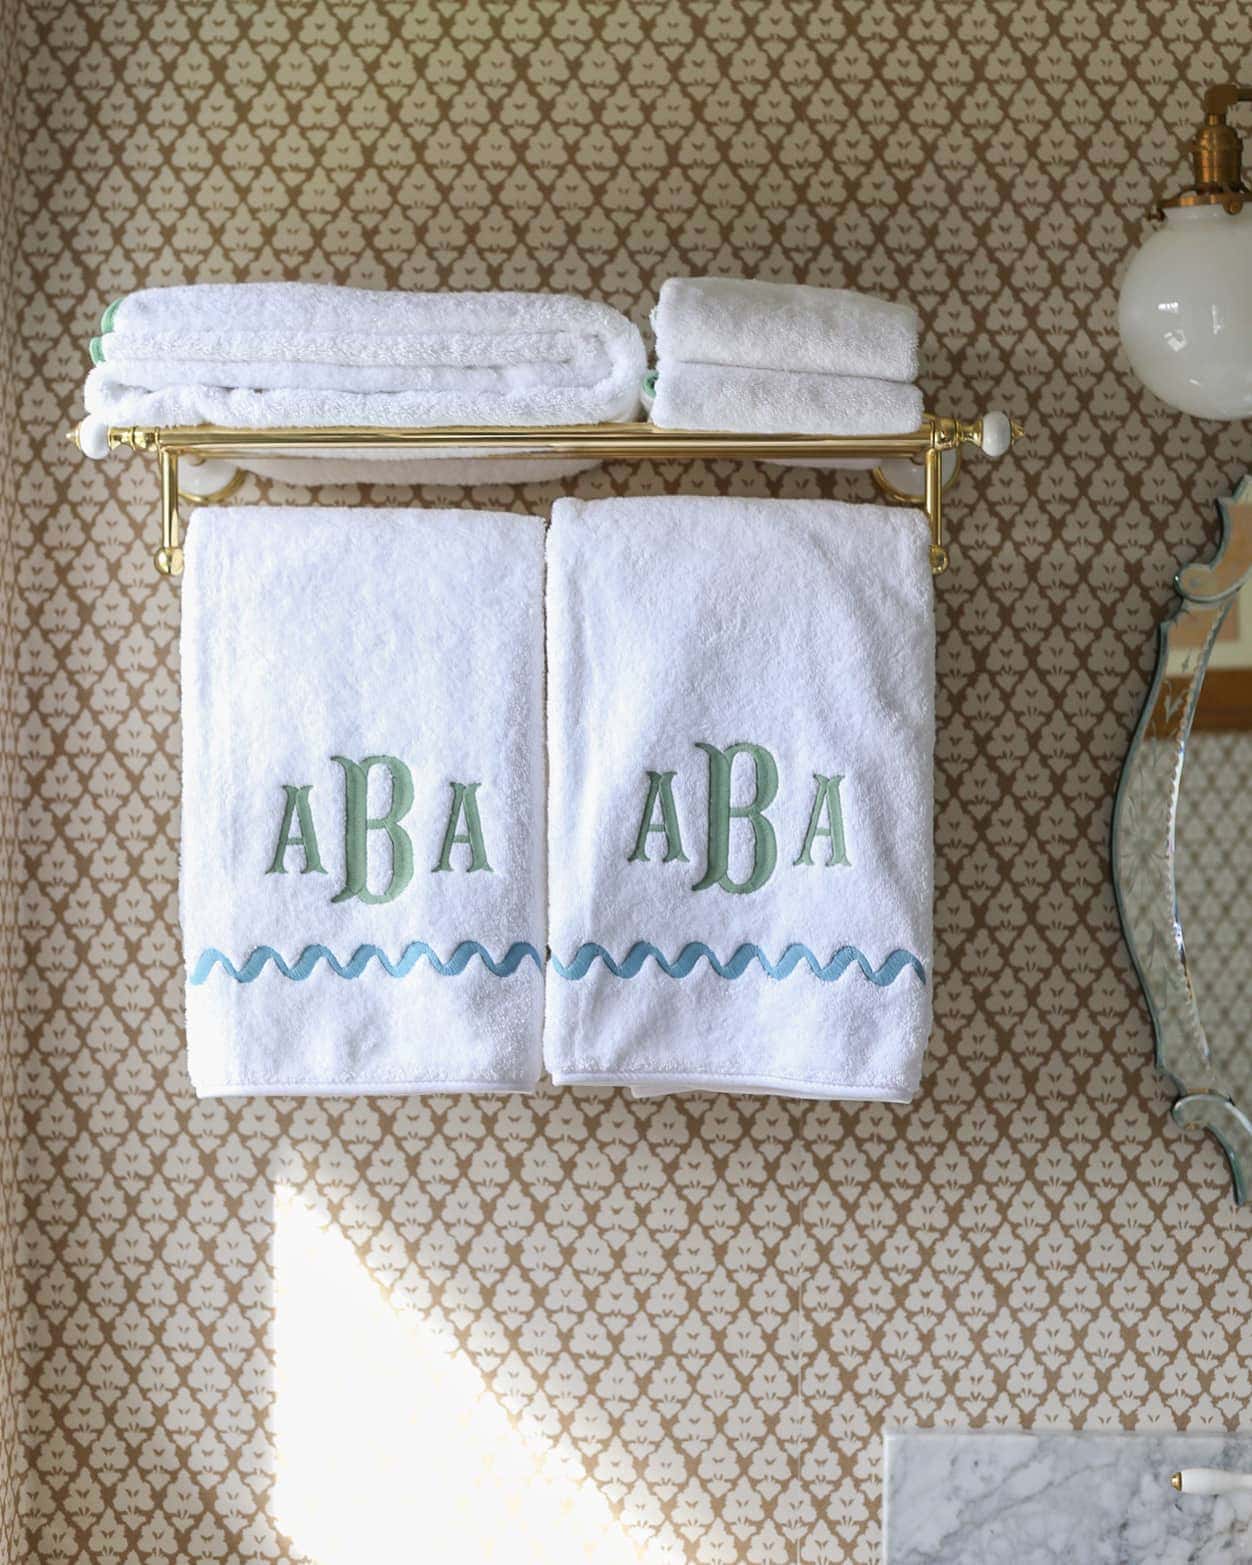 traditional-master-bathroom-design-bathroom-makeover-ideas-wallpaper-monogram-towels-brass-hardware